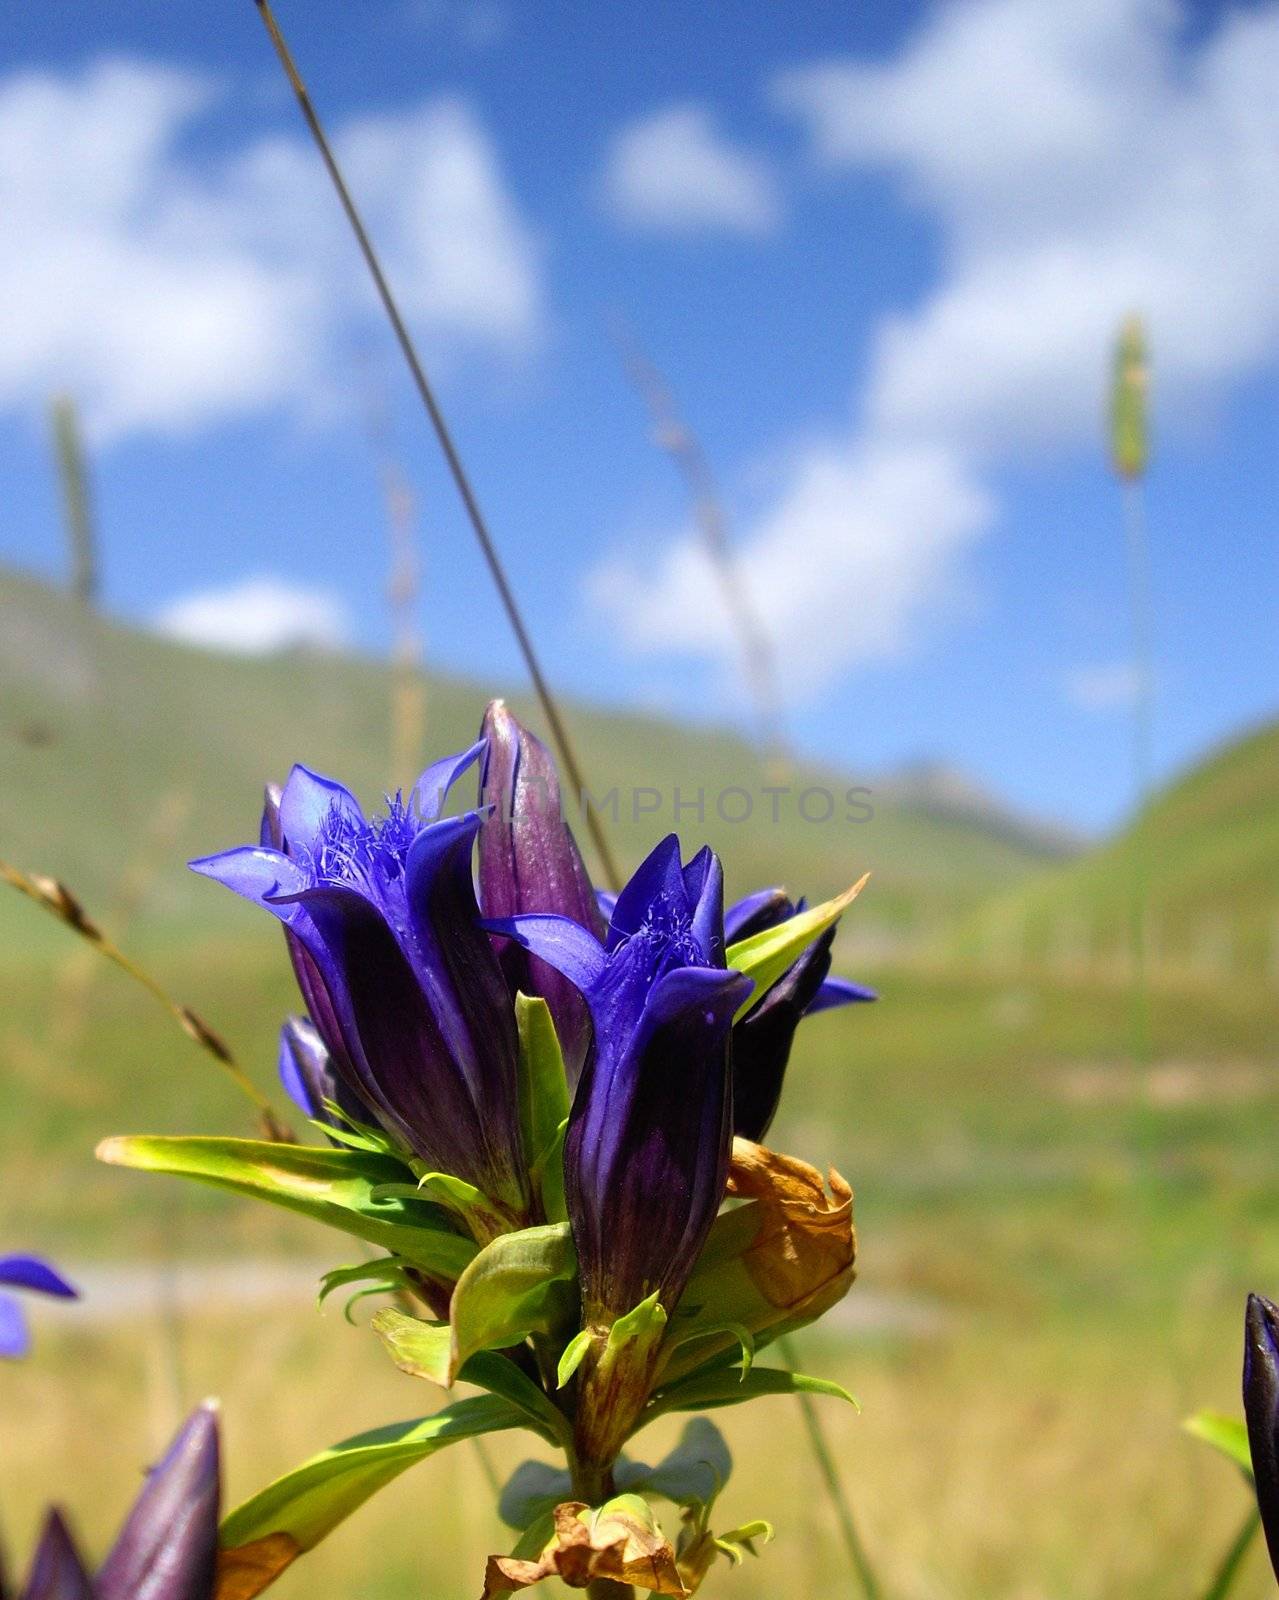 Bluebell flower by Elet